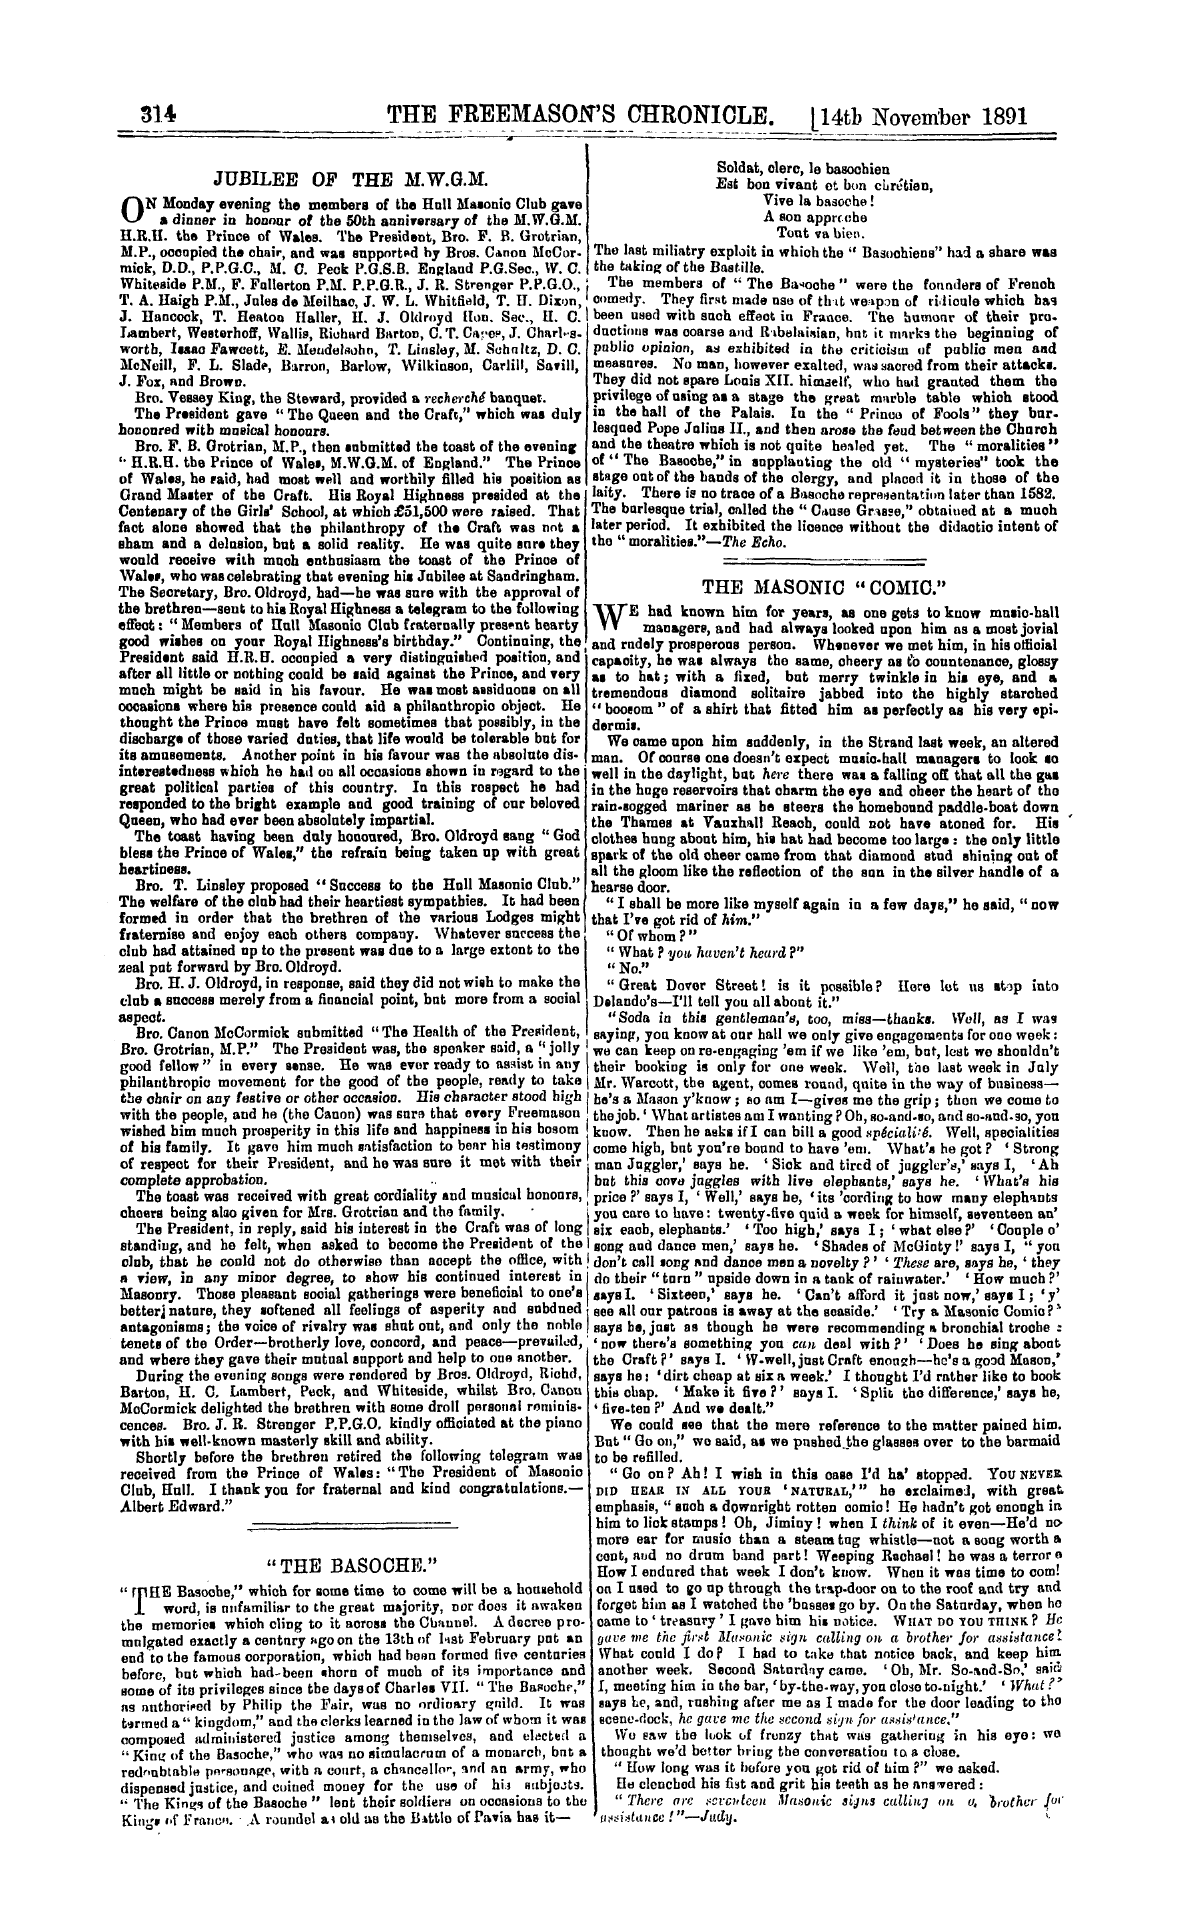 The Freemason's Chronicle: 1891-11-14: 10